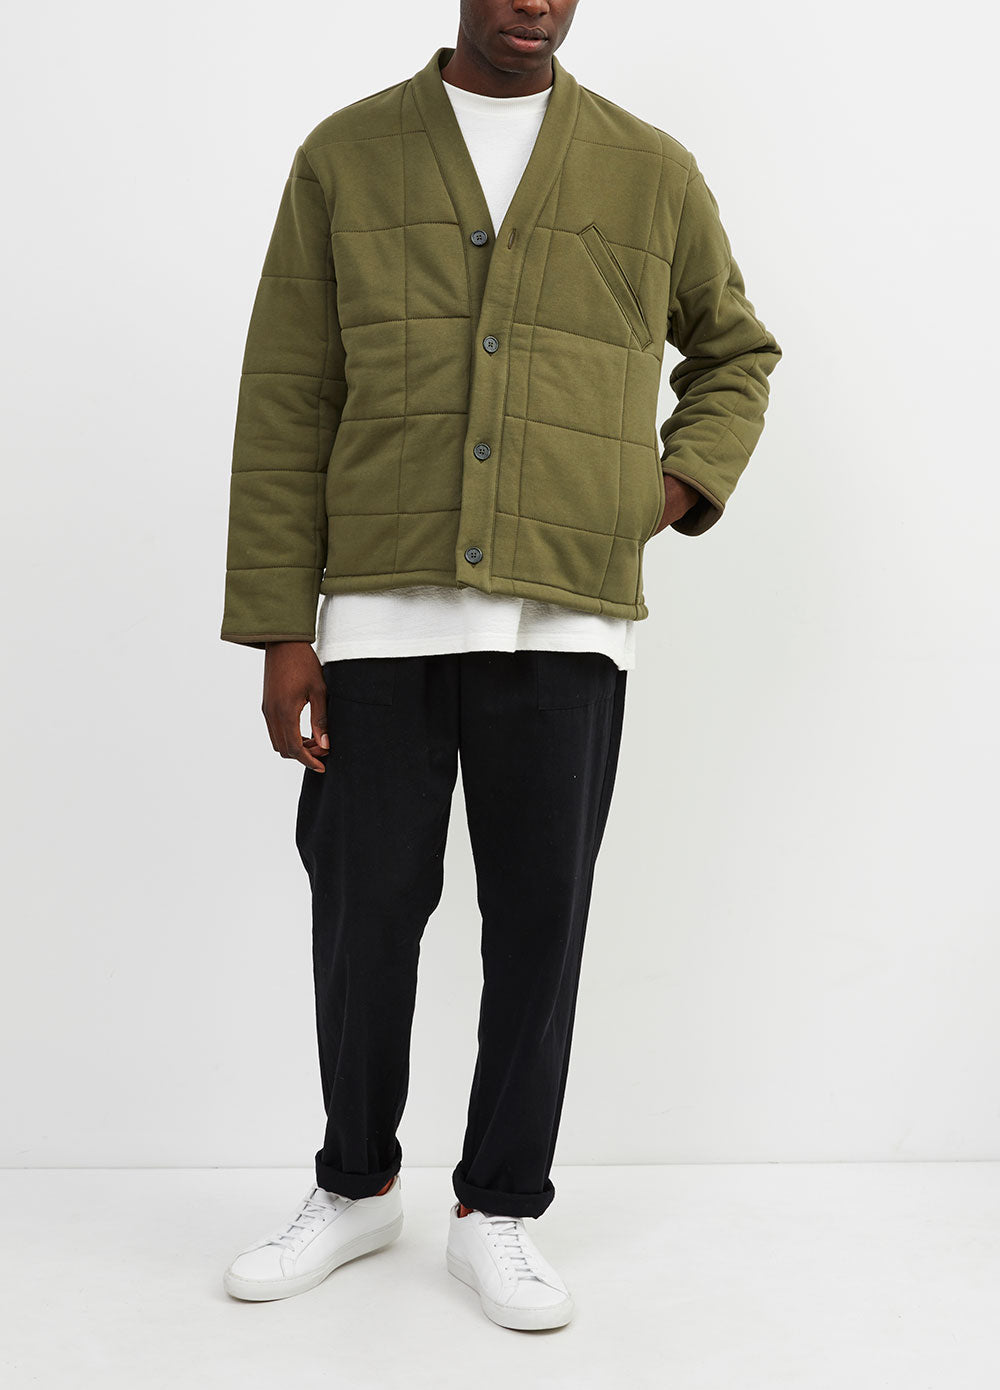 Men's Code green Geller Quilted Jacket by Saturdays NYC | Incu